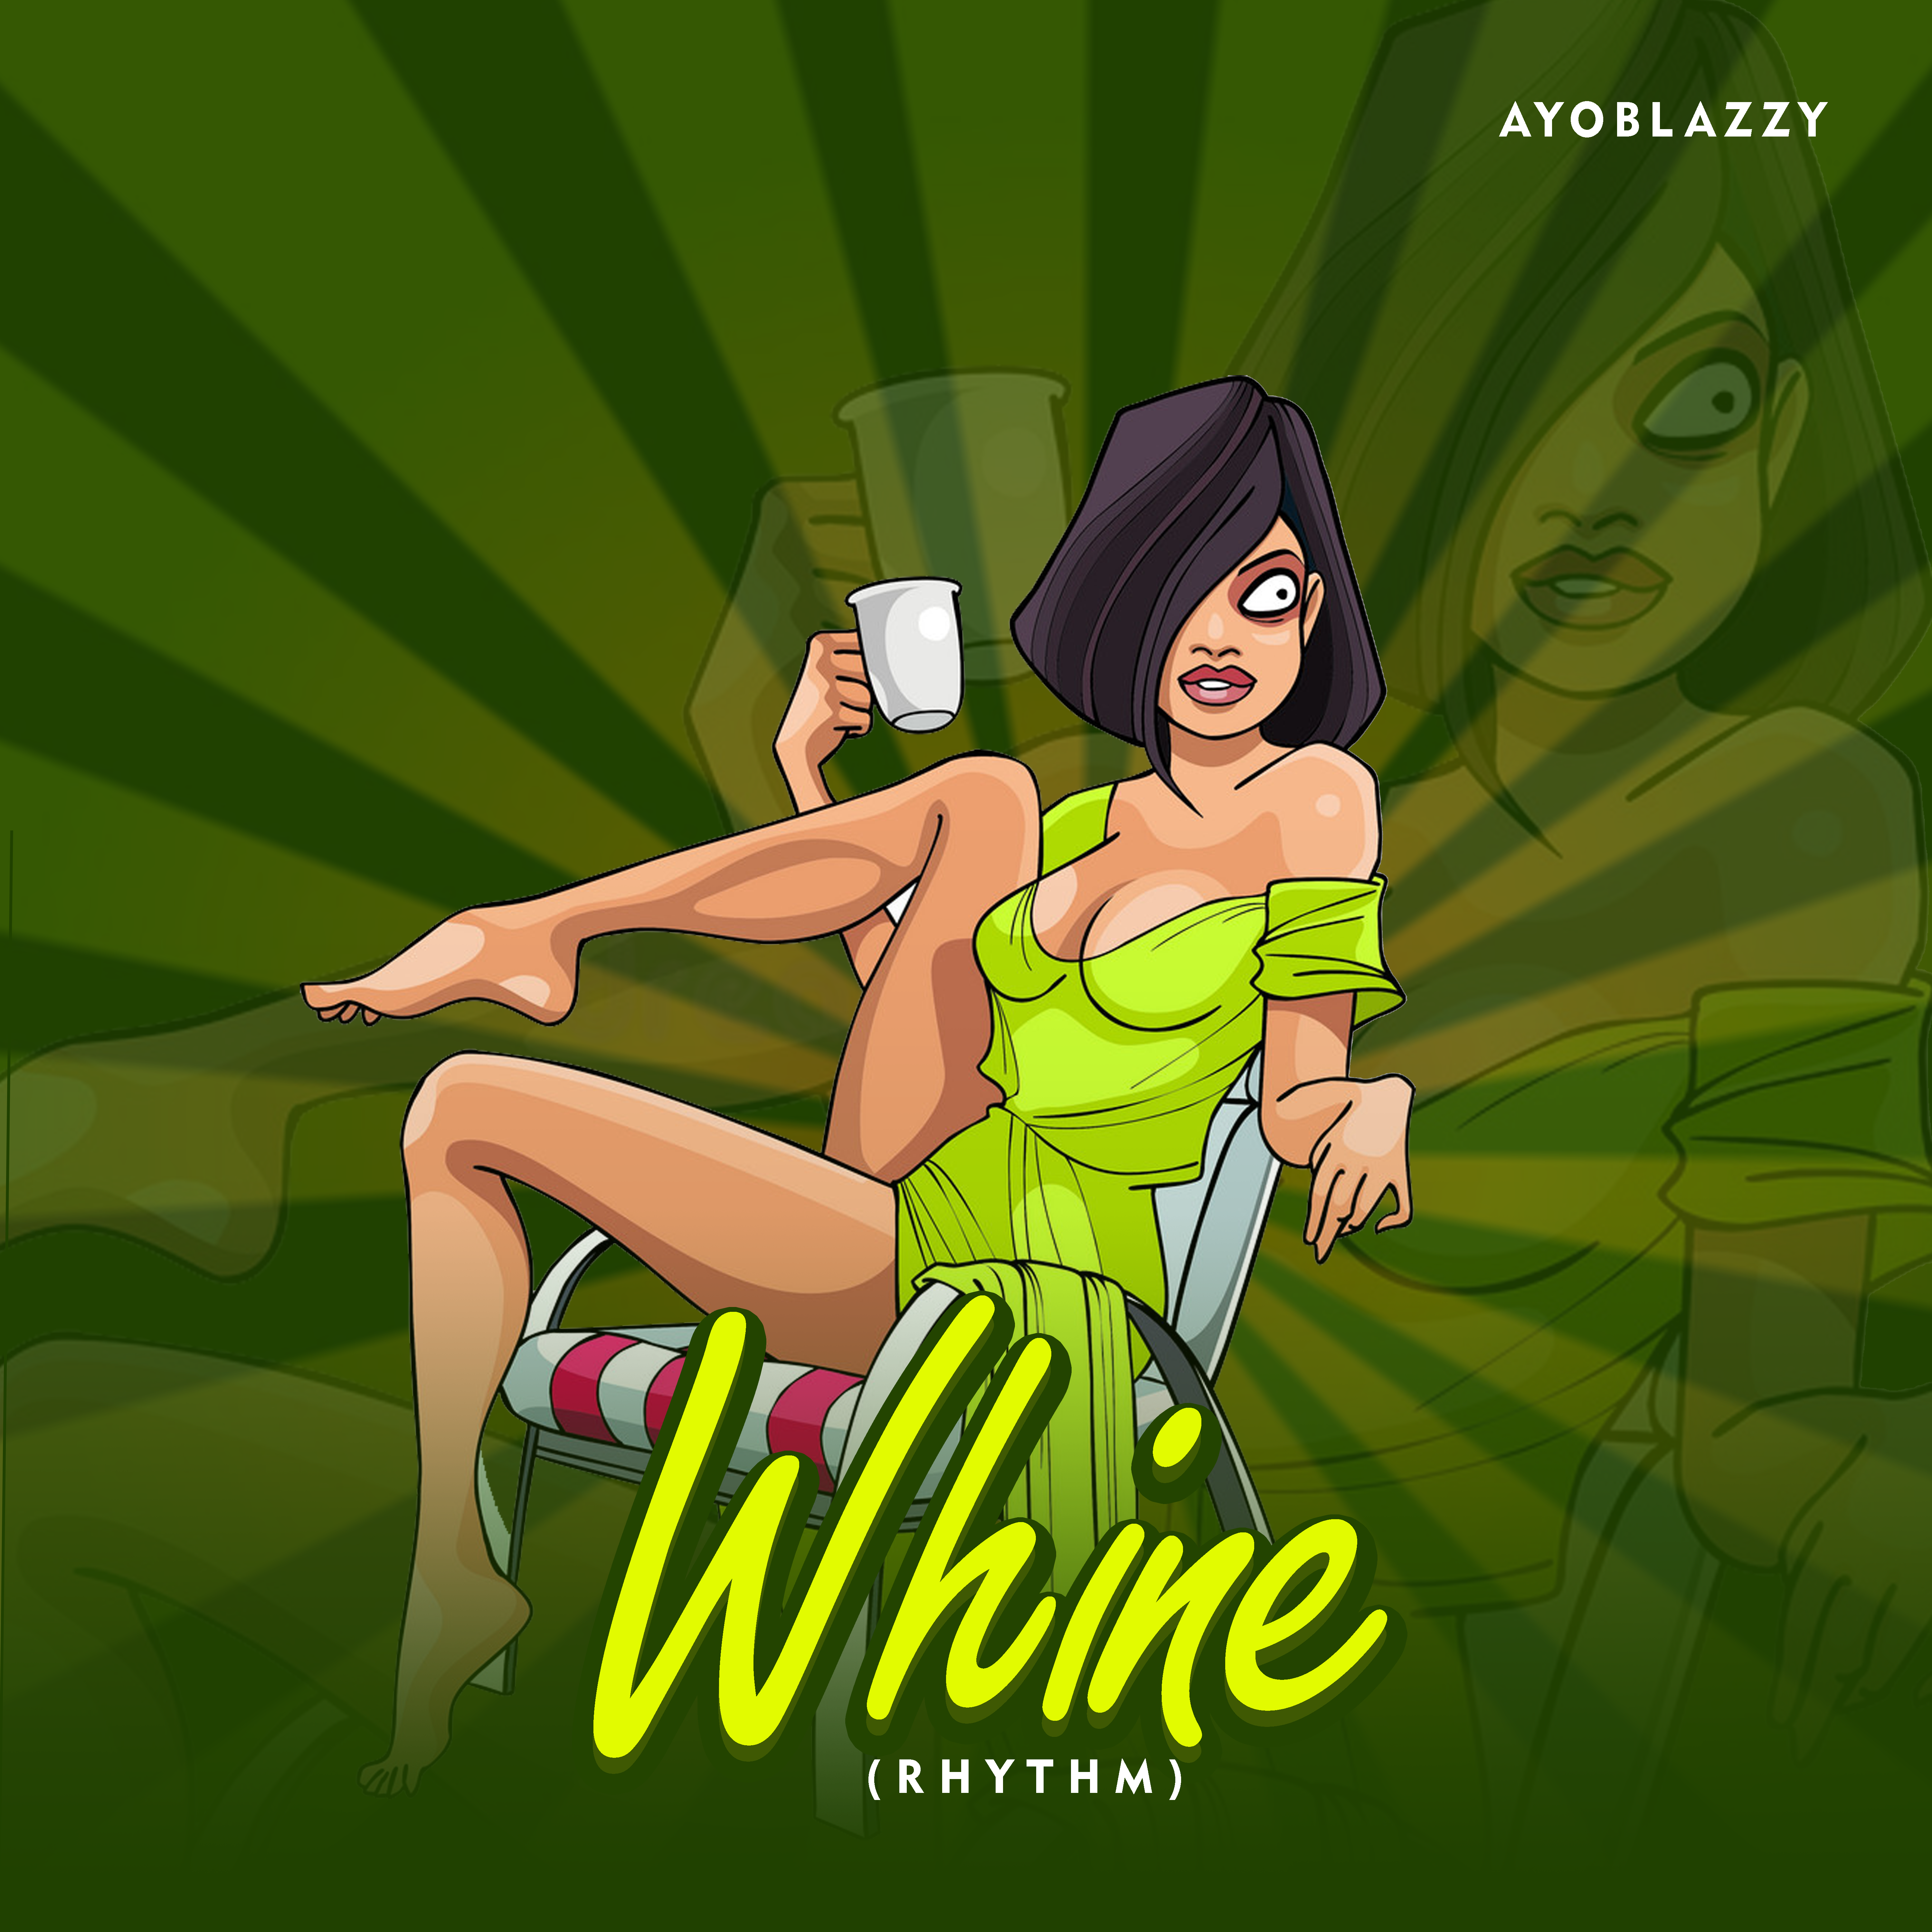 Ayoblazzy - Whine (Rhythm)